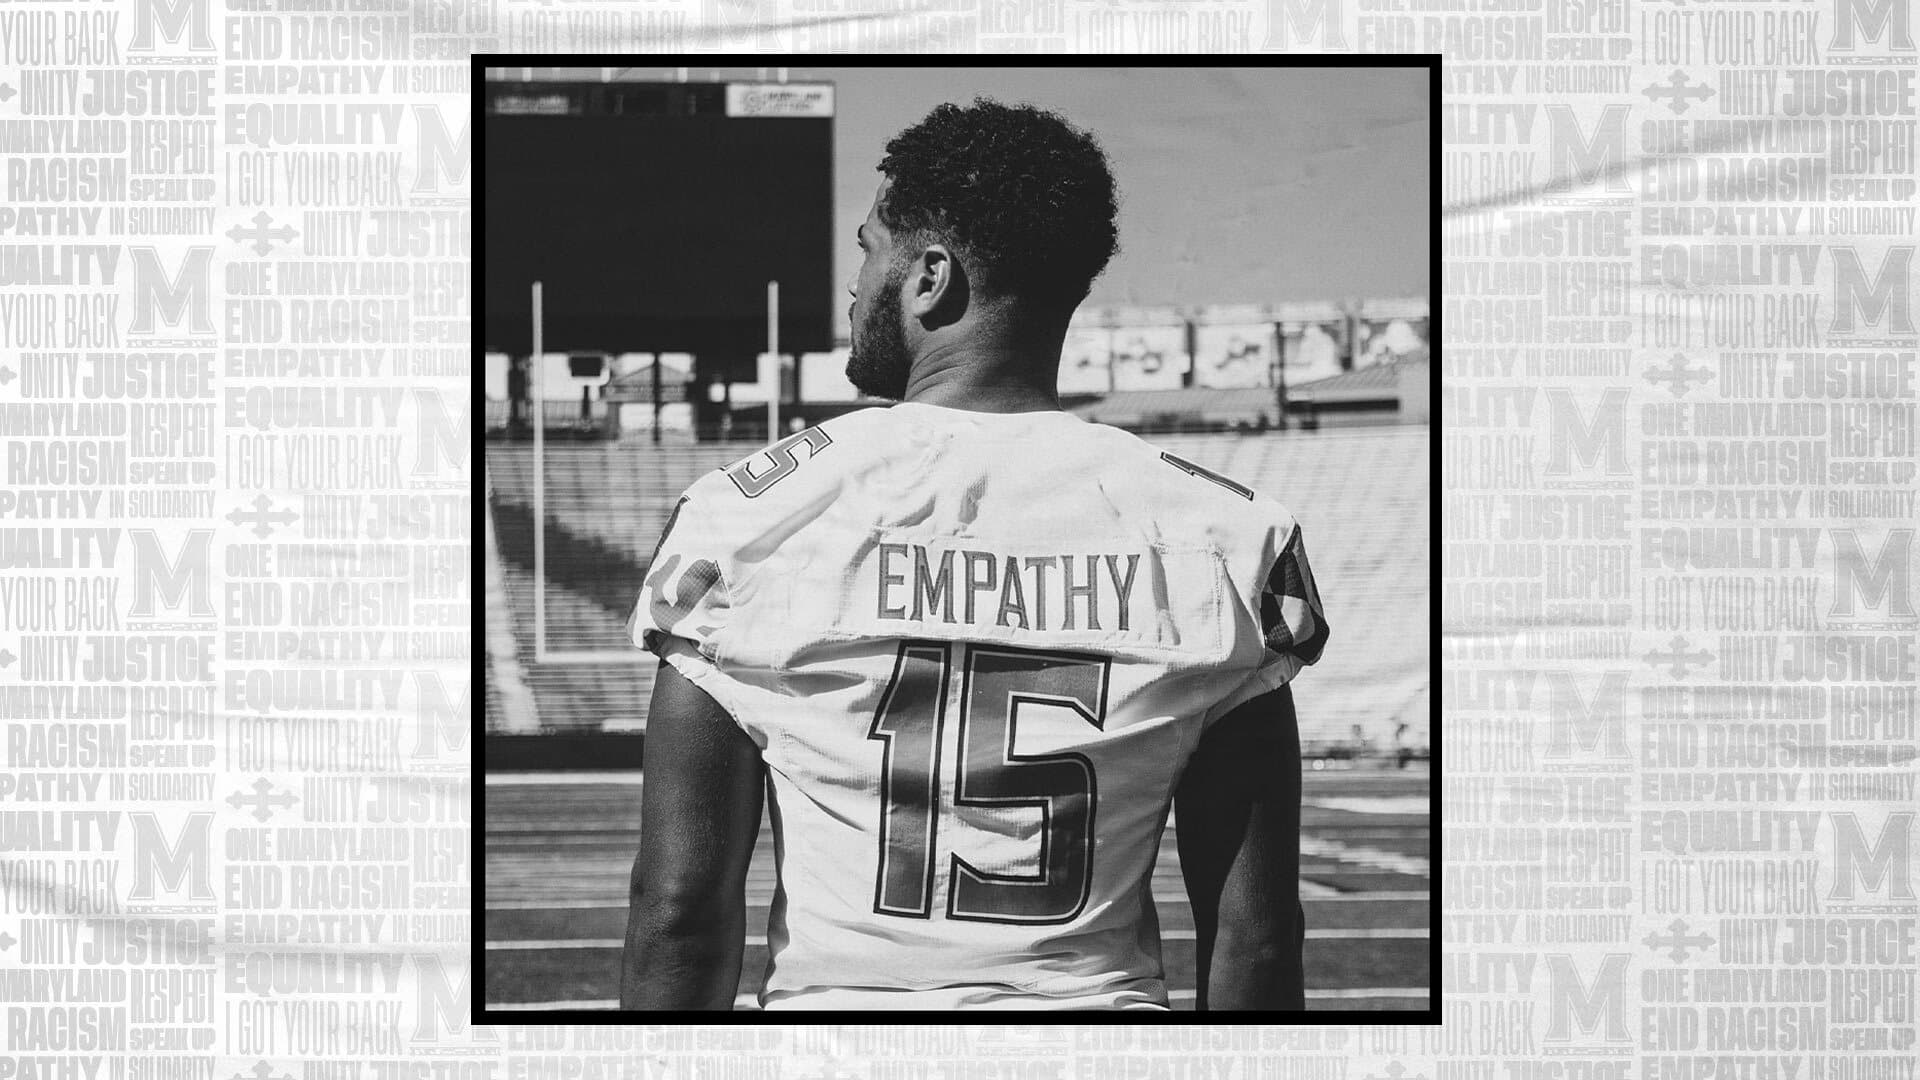 "Empathy" football jersey